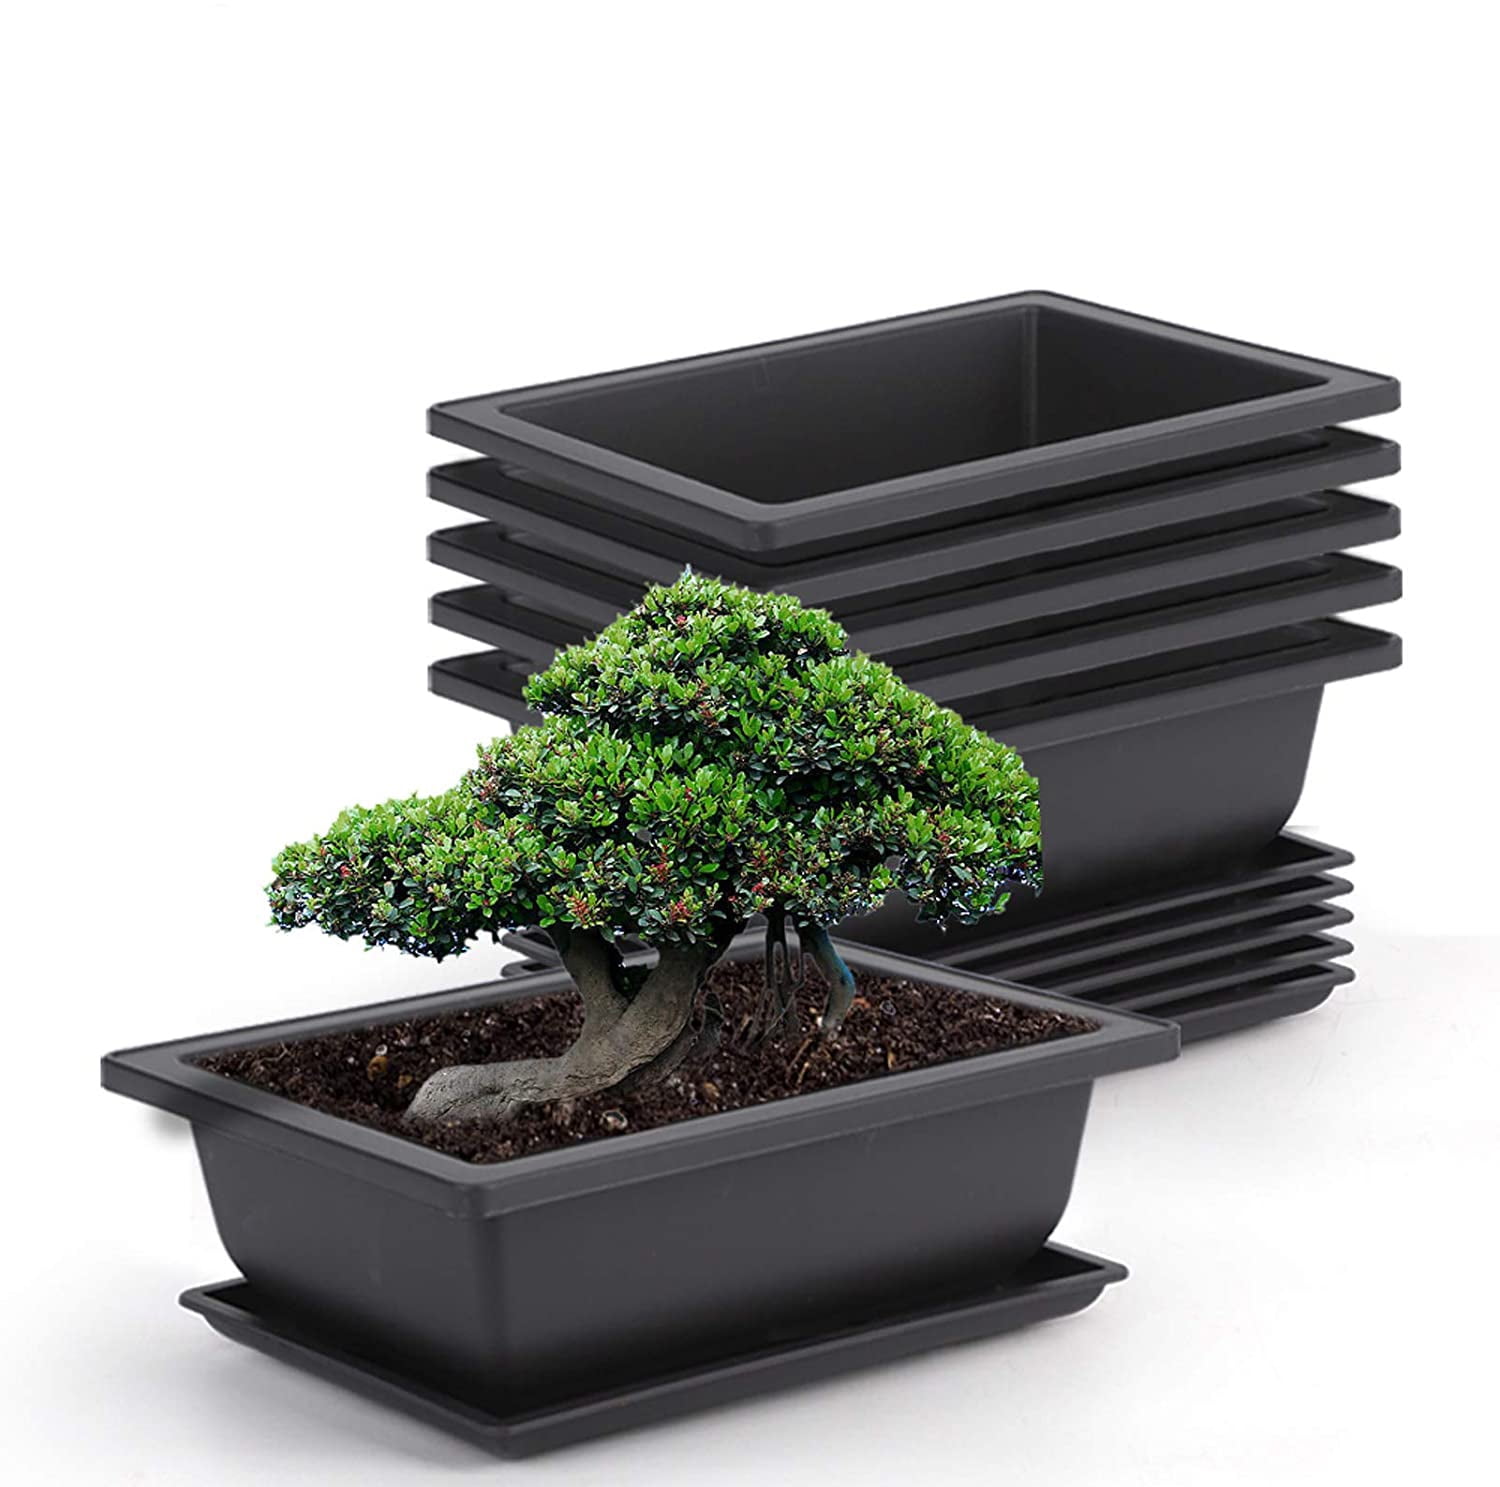 Breathable Flowerpot Plant Balcony Bonsai Basin Holder Nursery Garden Decor Box